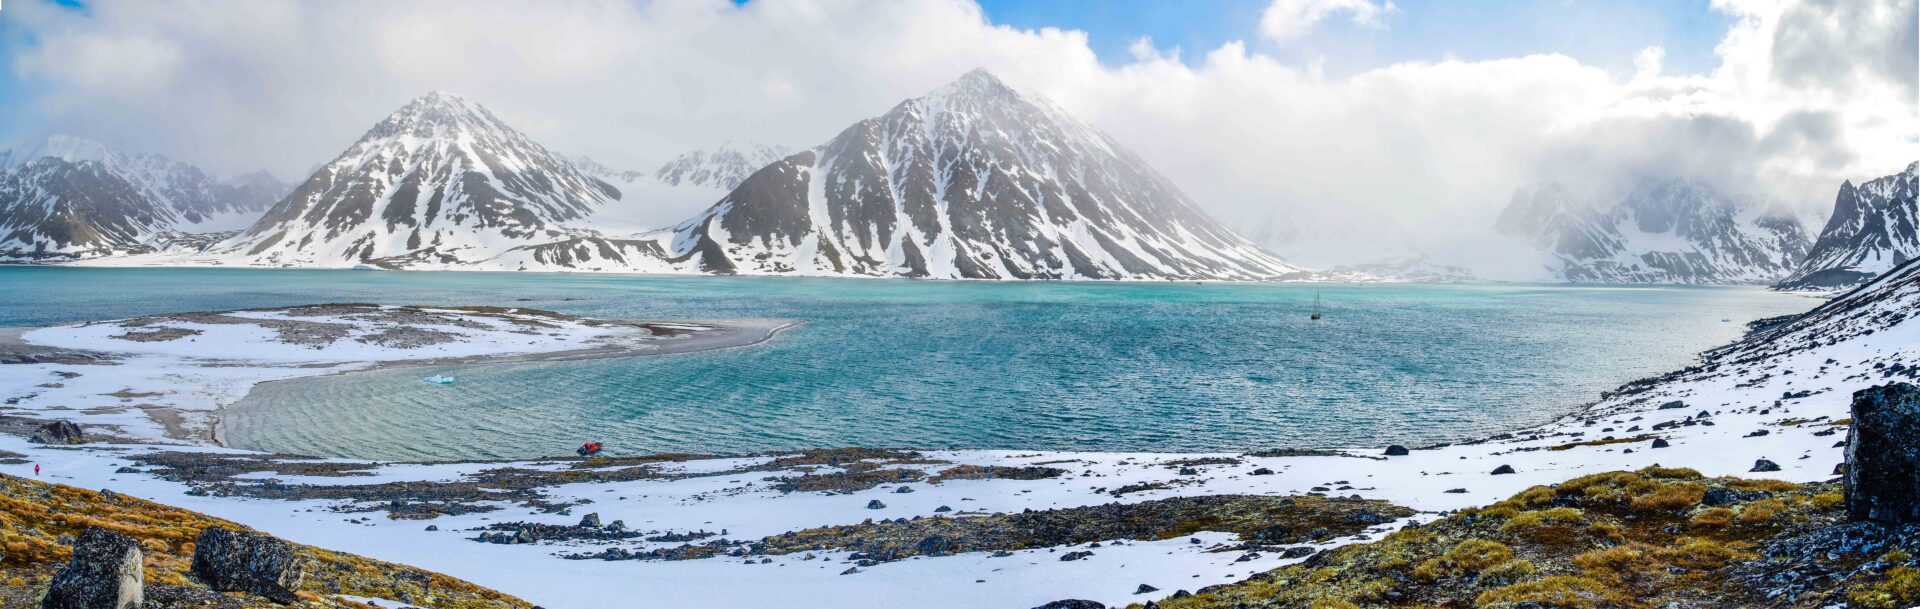 Expedition cruise Spitsbergen - Untamed Travelling - Ponant